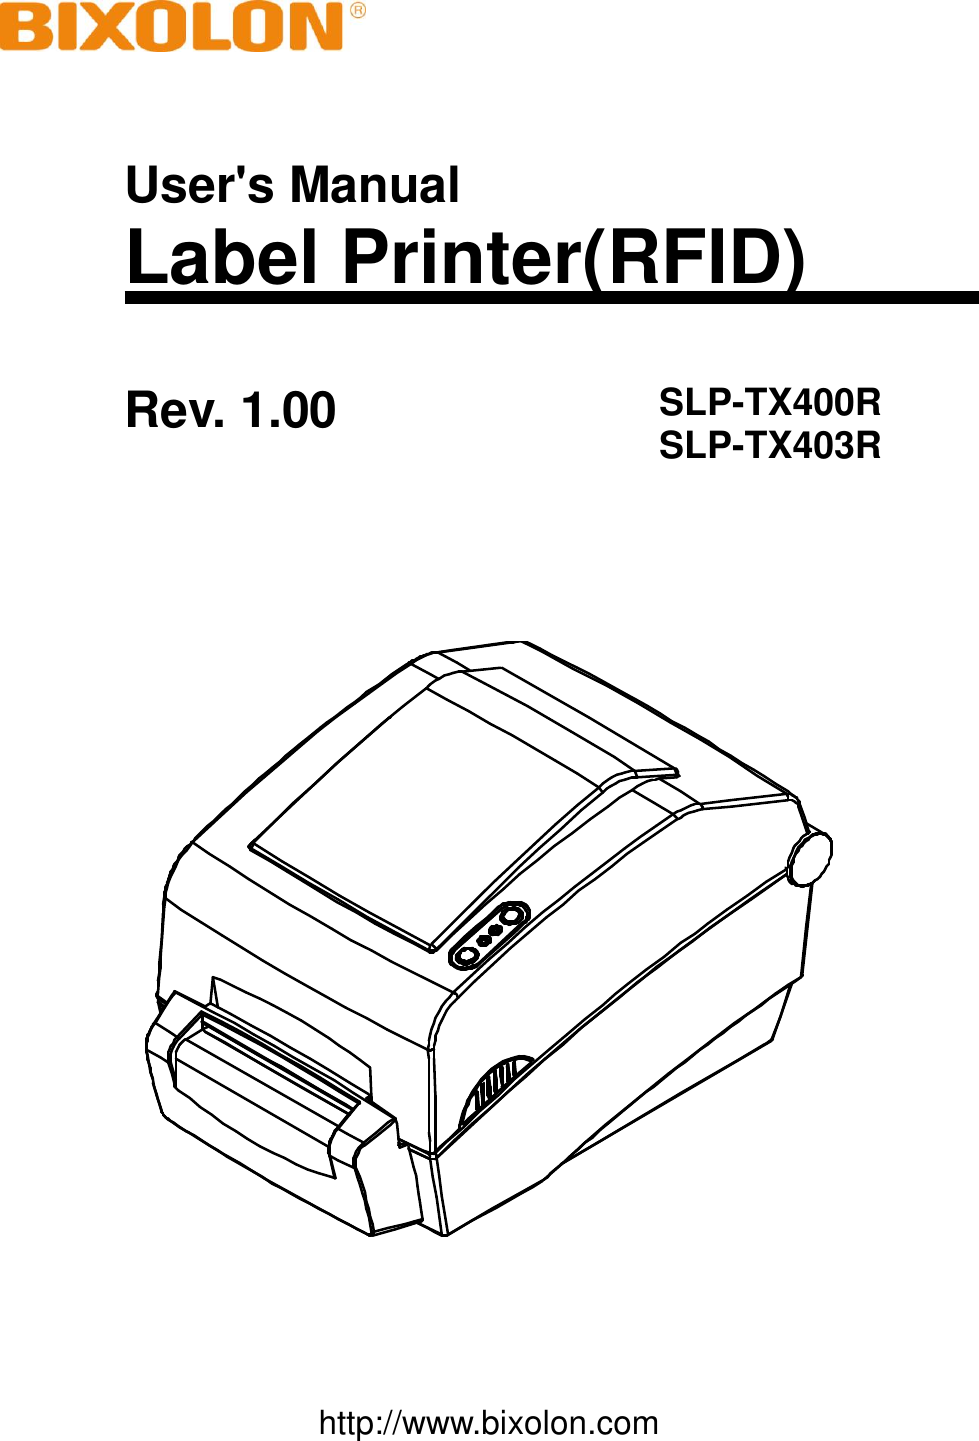      User&apos;s Manual Label Printer(RFID) Rev. 1.00 SLP-TX400R SLP-TX403R    http://www.bixolon.com 